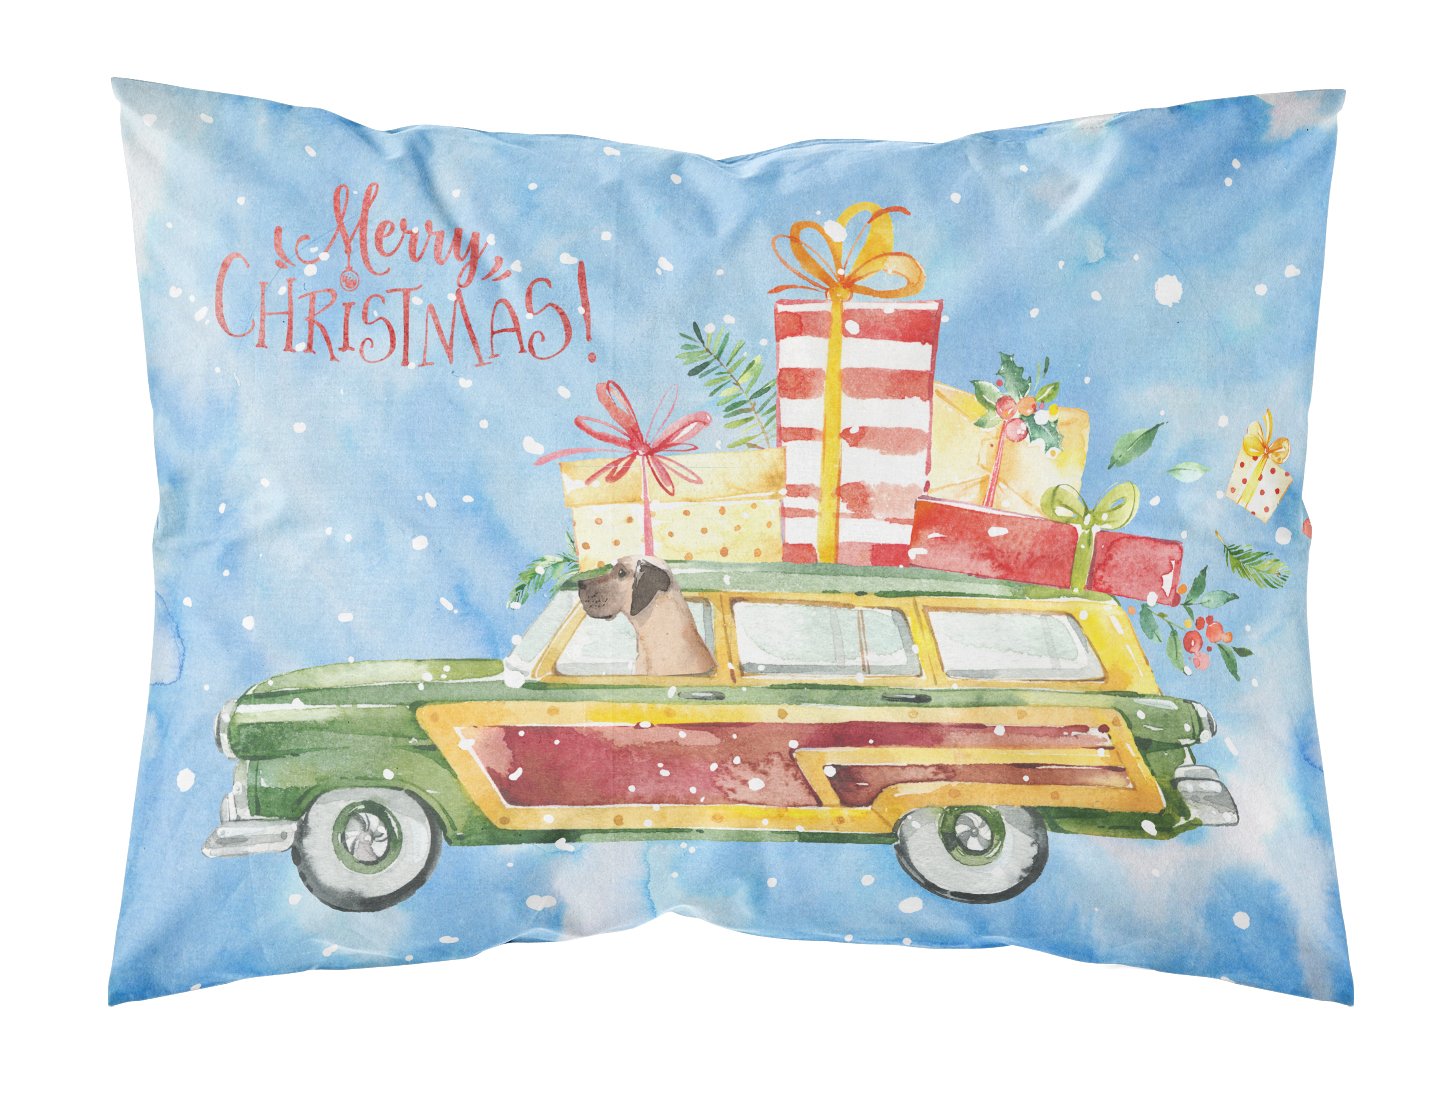 Merry Christmas Great Dane Fabric Standard Pillowcase CK2456PILLOWCASE by Caroline's Treasures